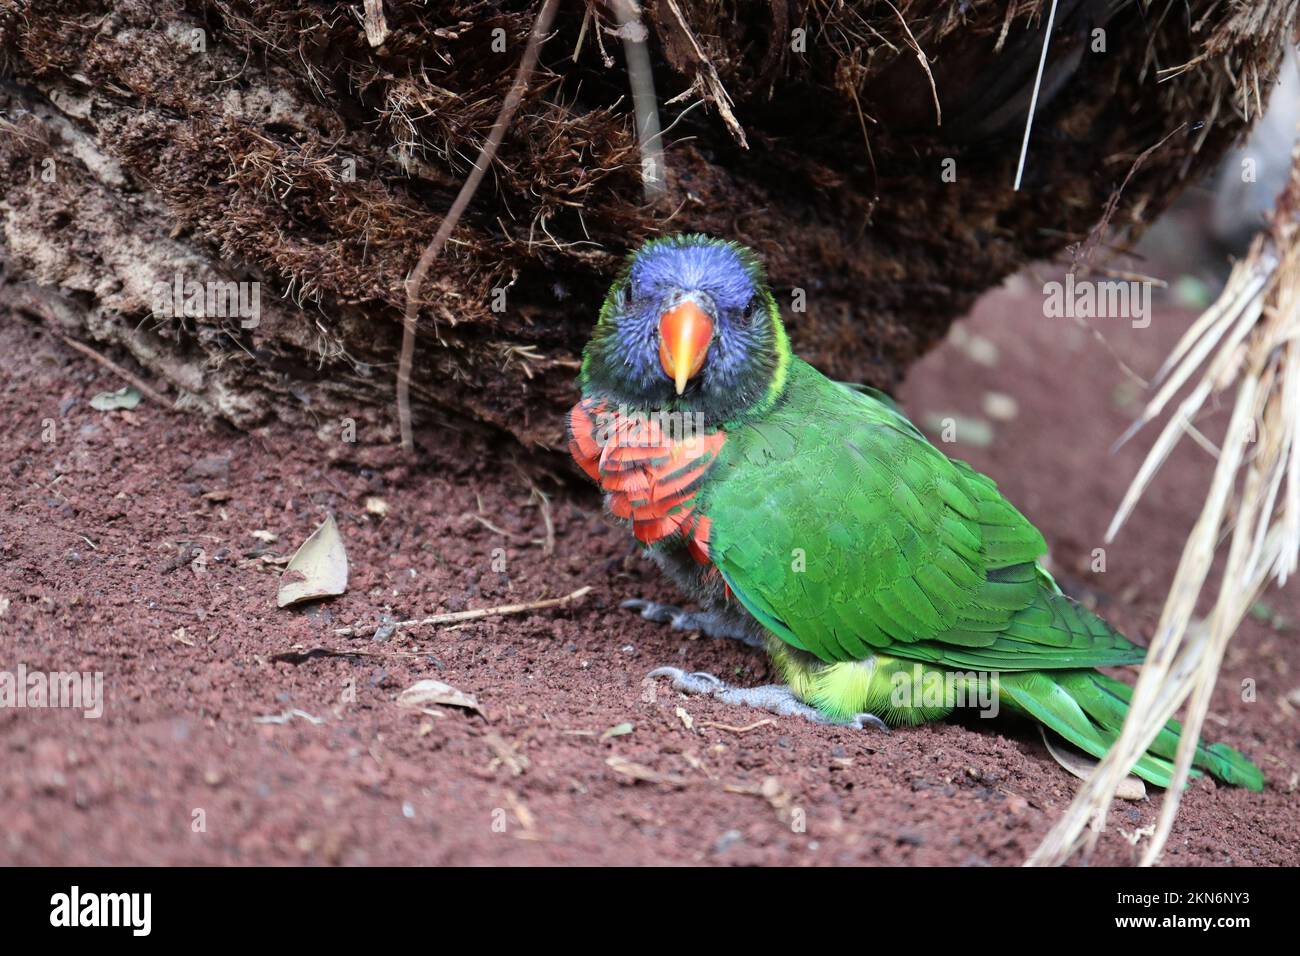 A closeup of a rainbow colored Loriini parrot Stock Photo